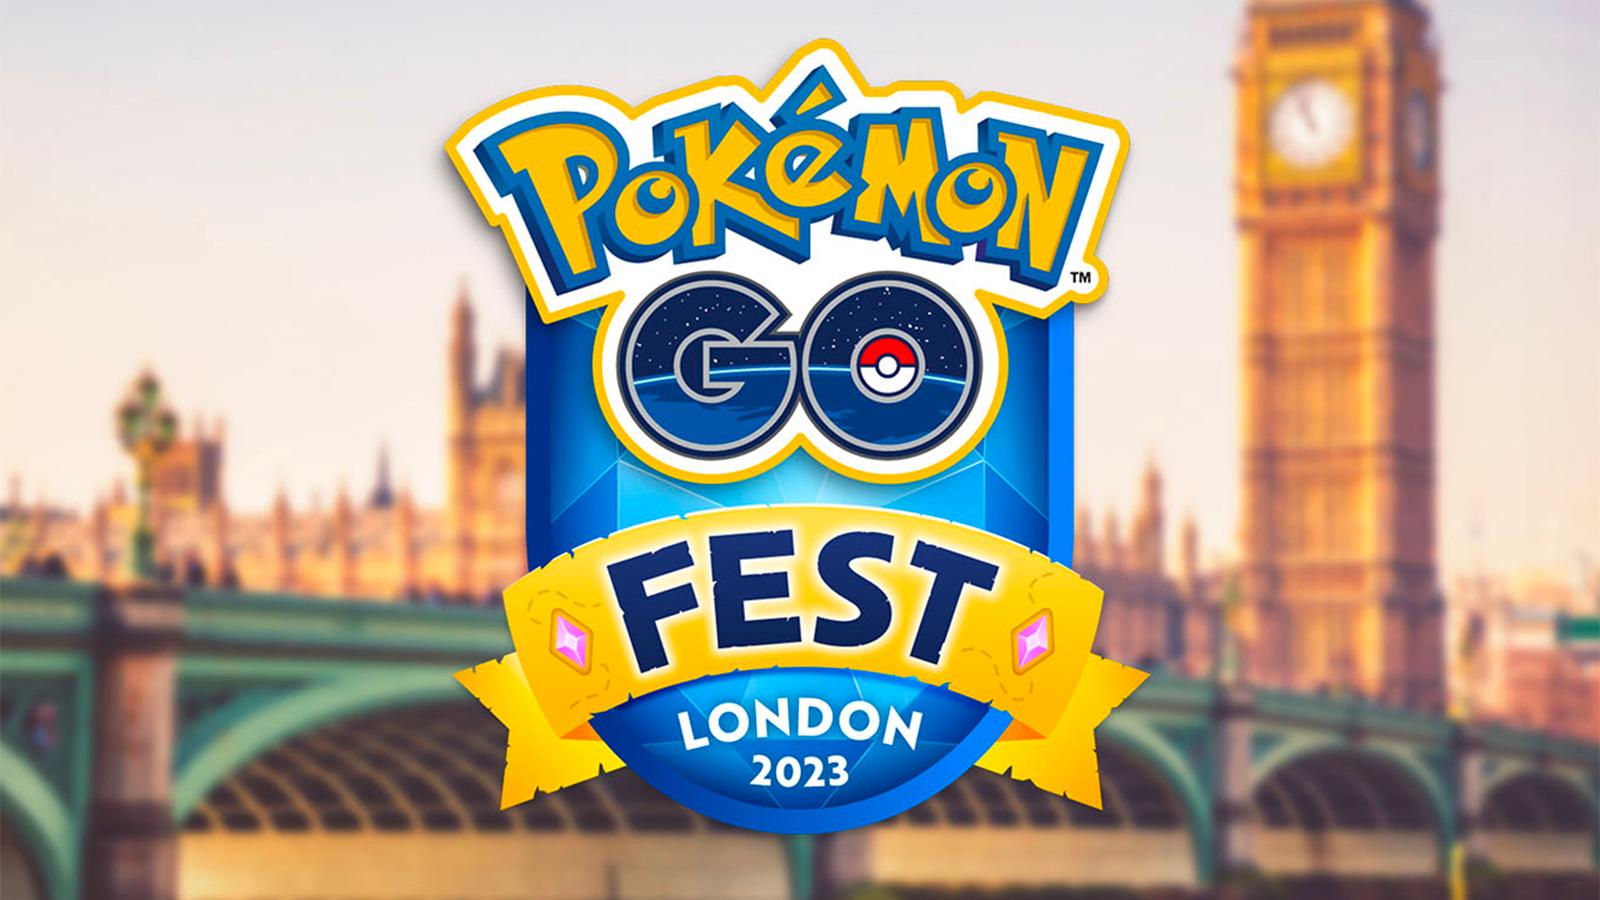 A poster for Pokemon Go Fest 2023 in London